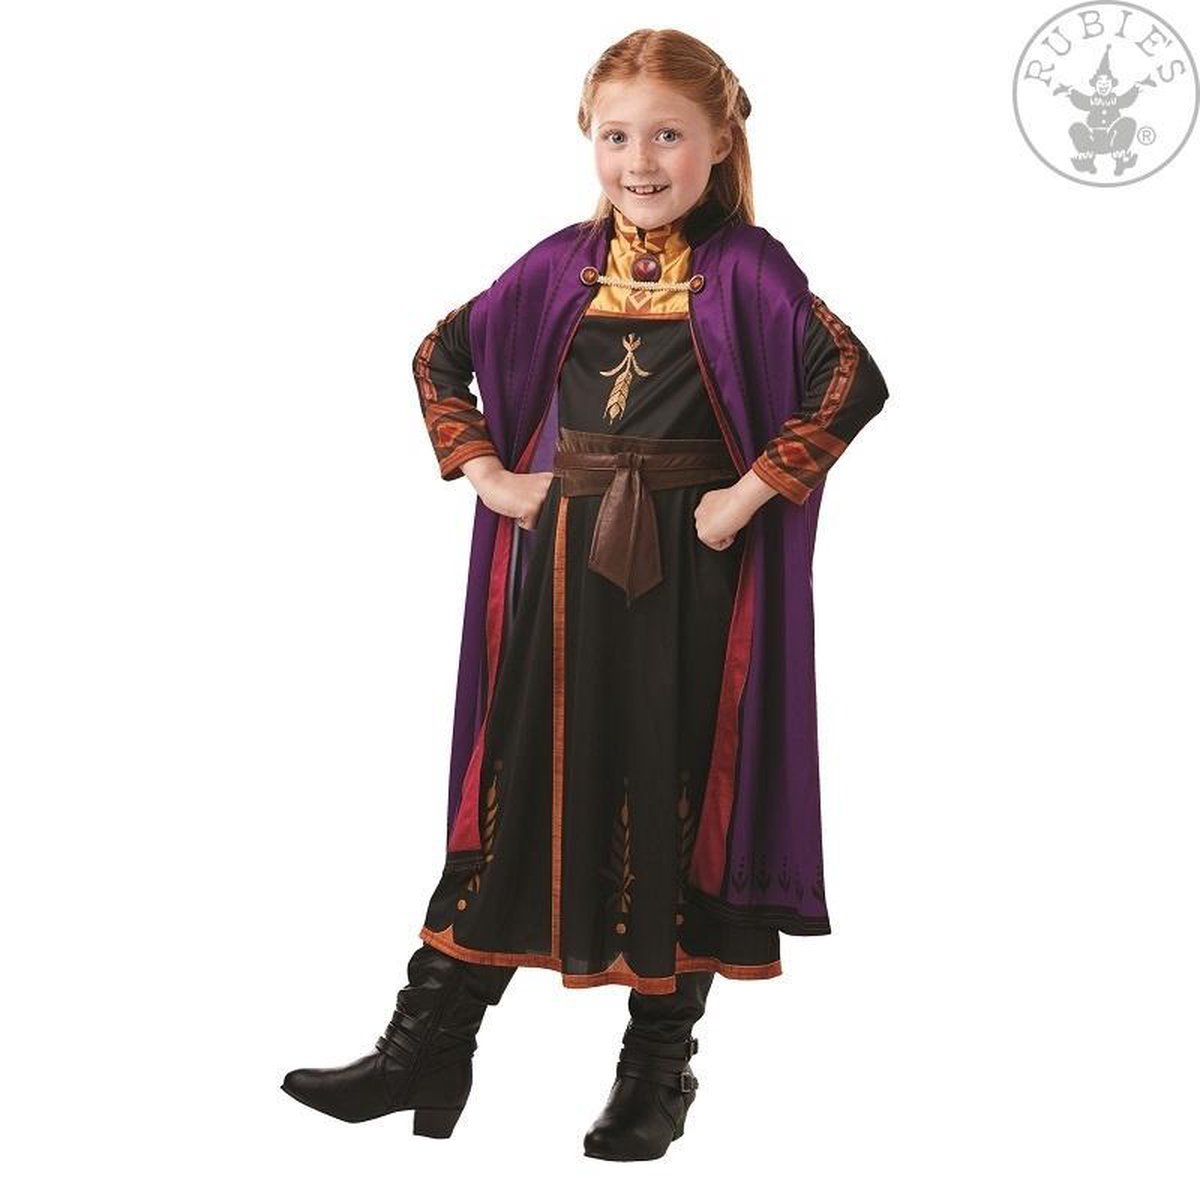 Frozen - Anna Travel Dress - Childrens Costume Size 104 / Dress Up / Multi / S